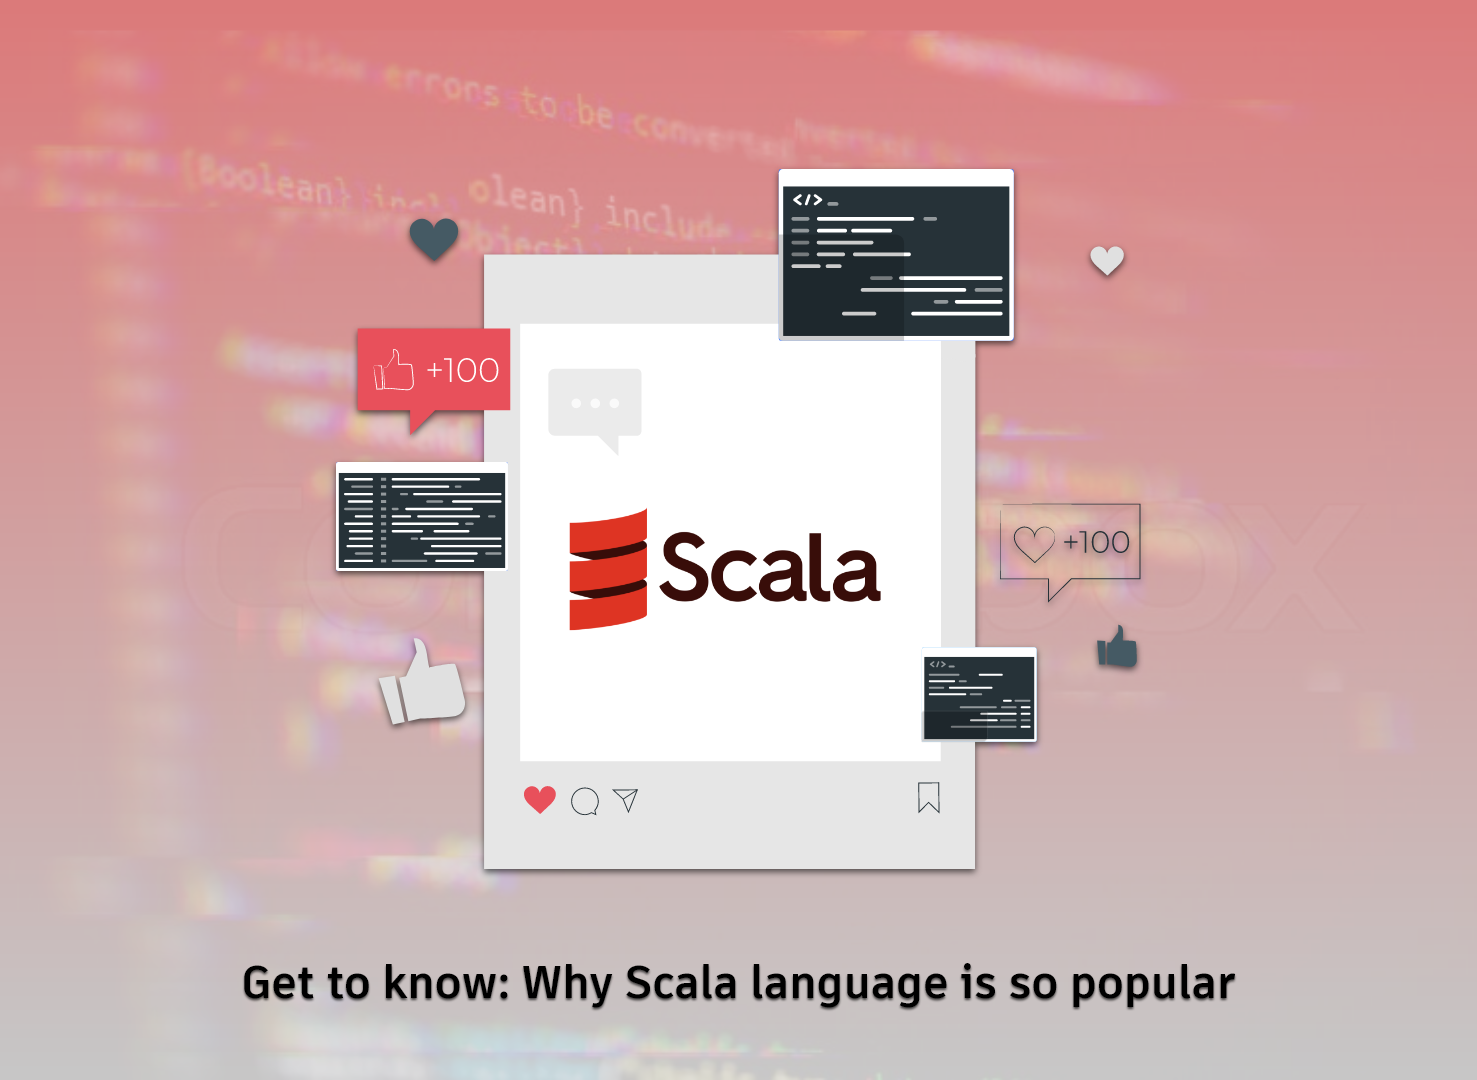 Scala Programming Language